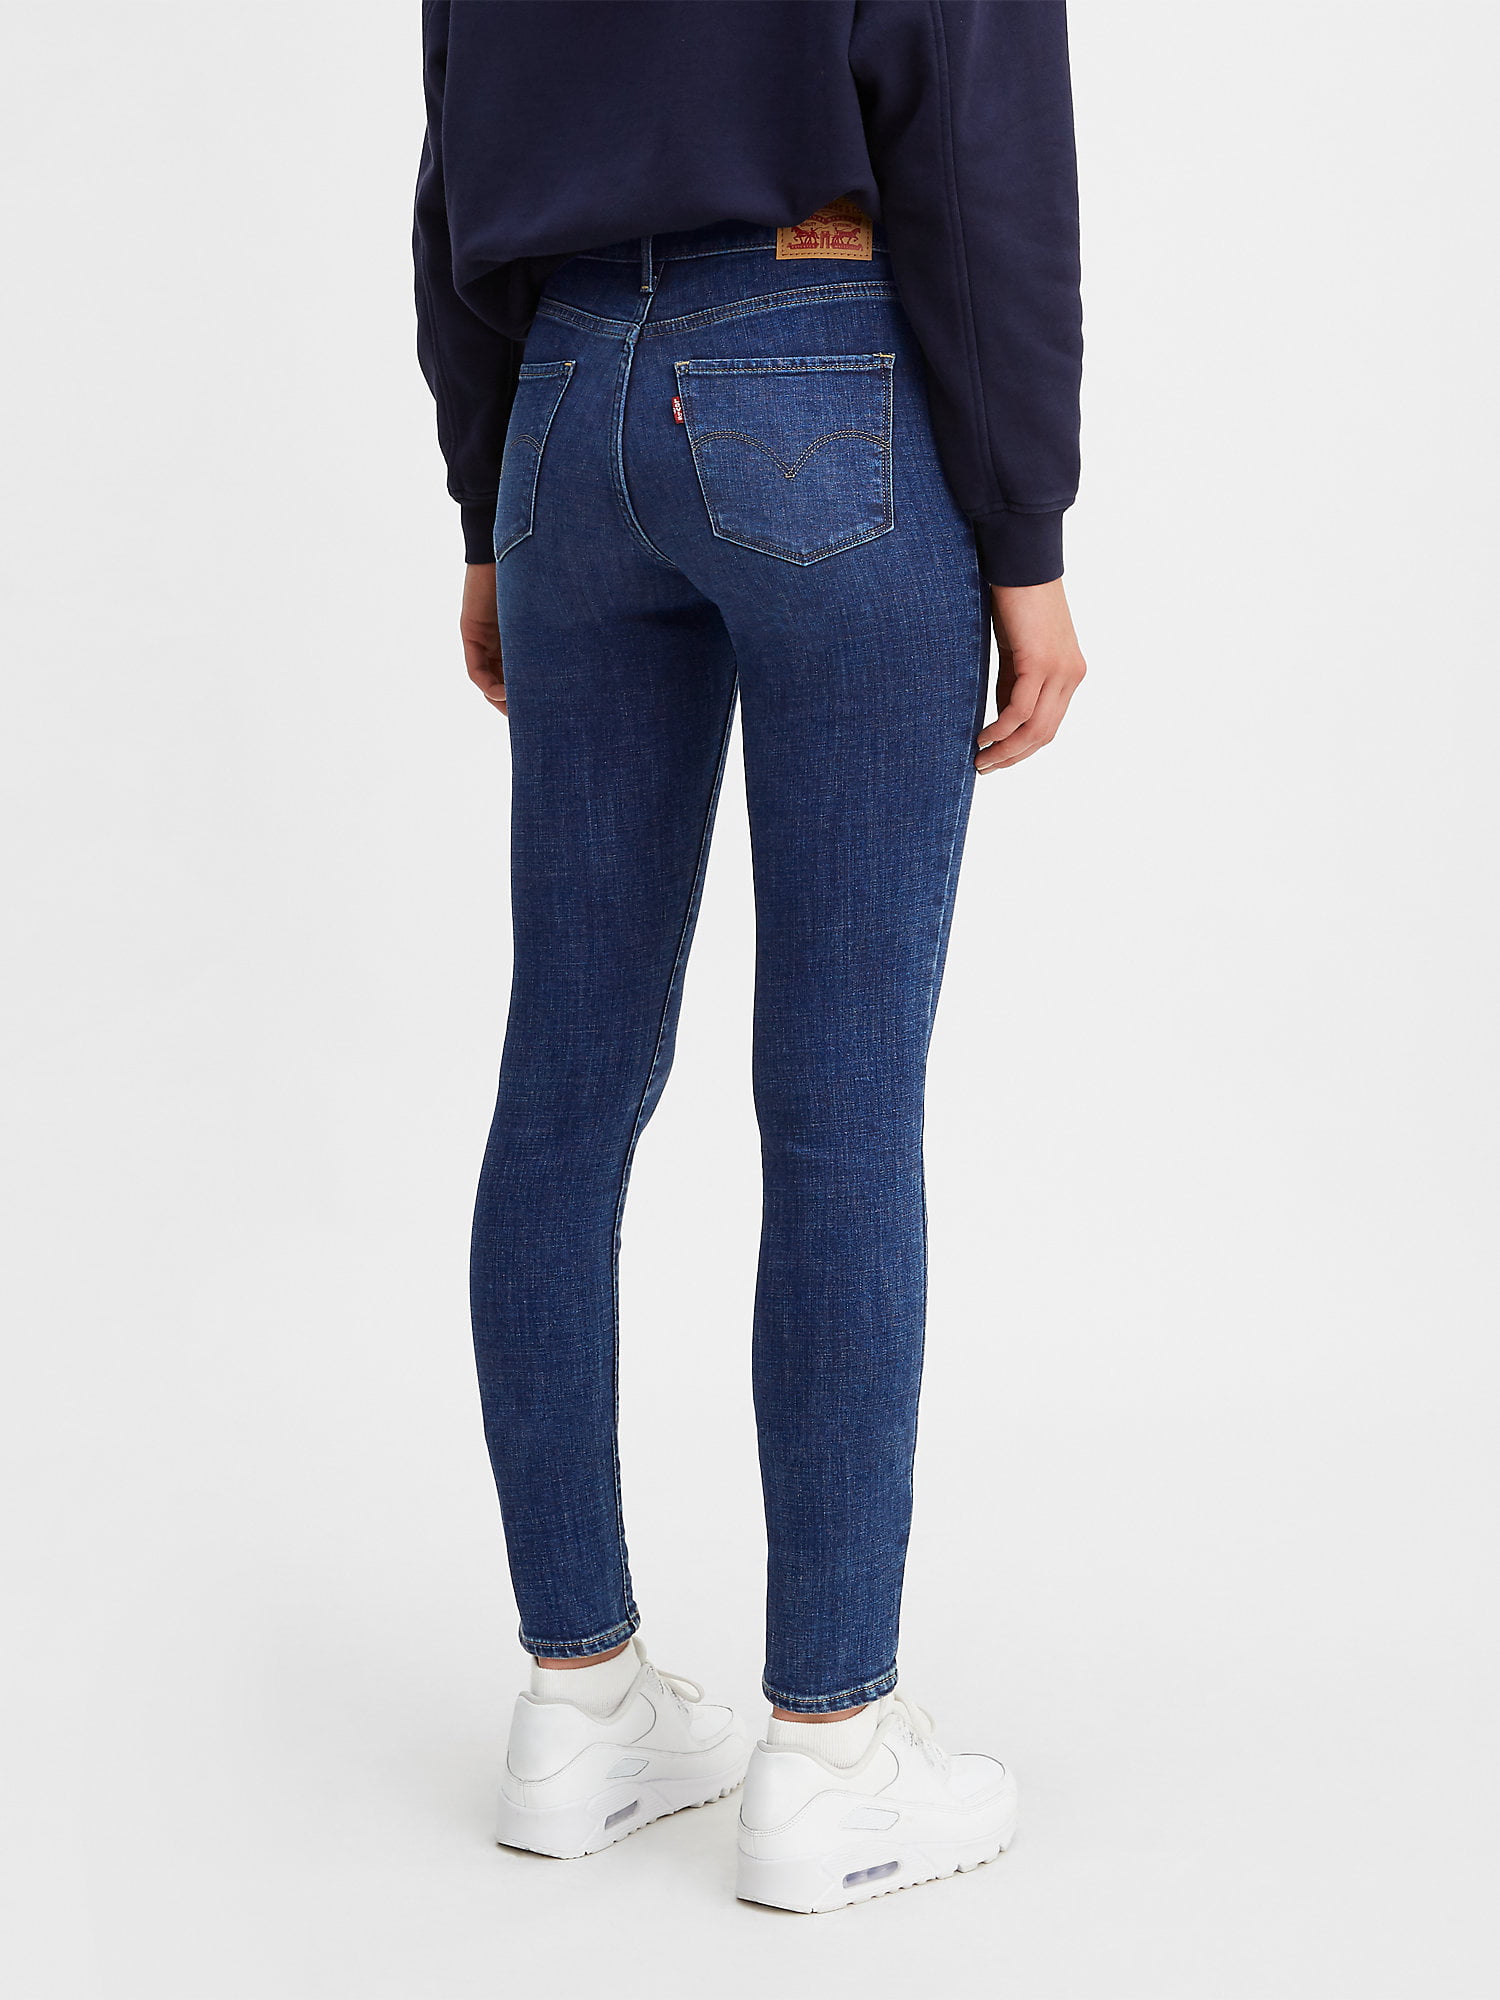 Levi's Original Original Women's 311 Shaping Skinny Jeans 